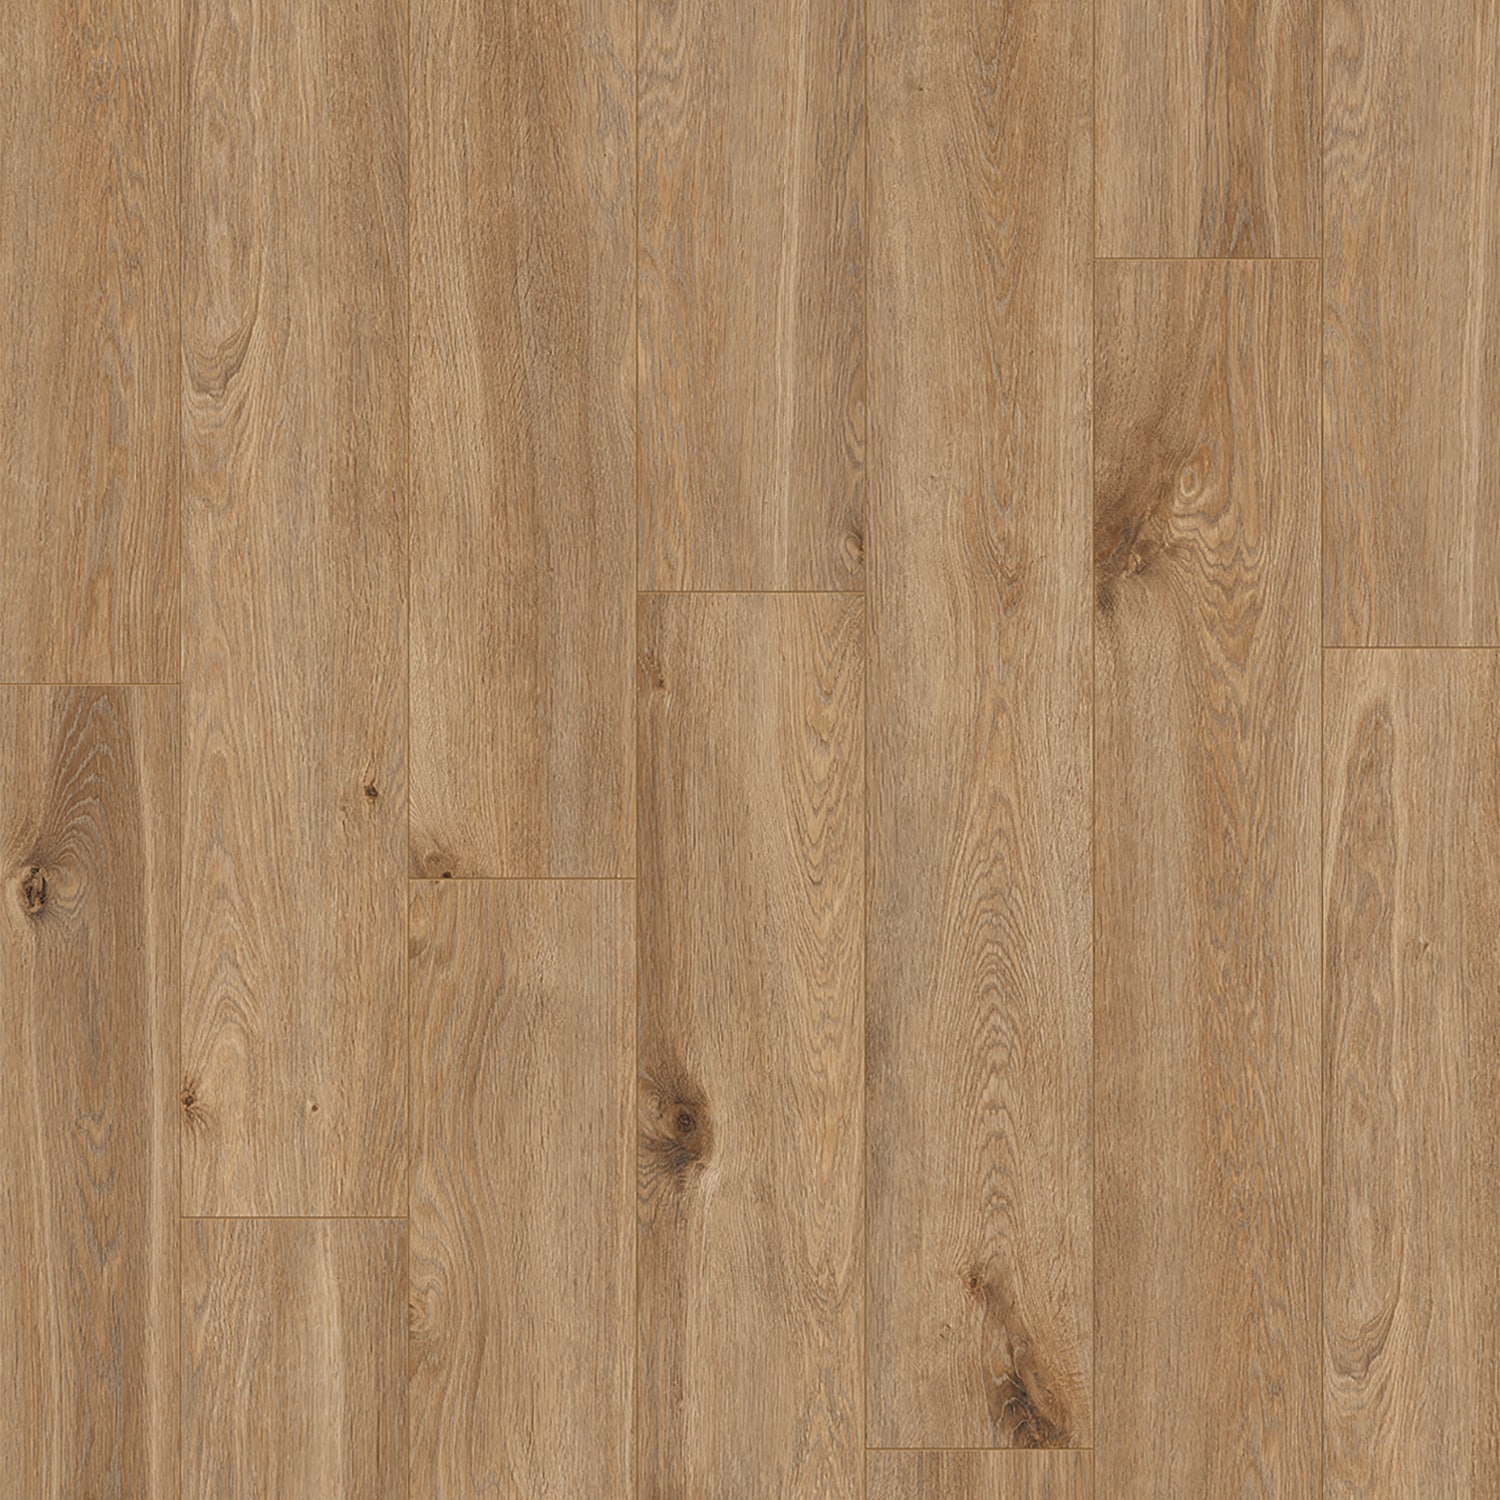 LiquiDefense Mayan oak Medium Brown 12-mm T x 8-in W x 50-in L Wood Plank  Laminate Flooring (15.93-sq ft / Carton) at